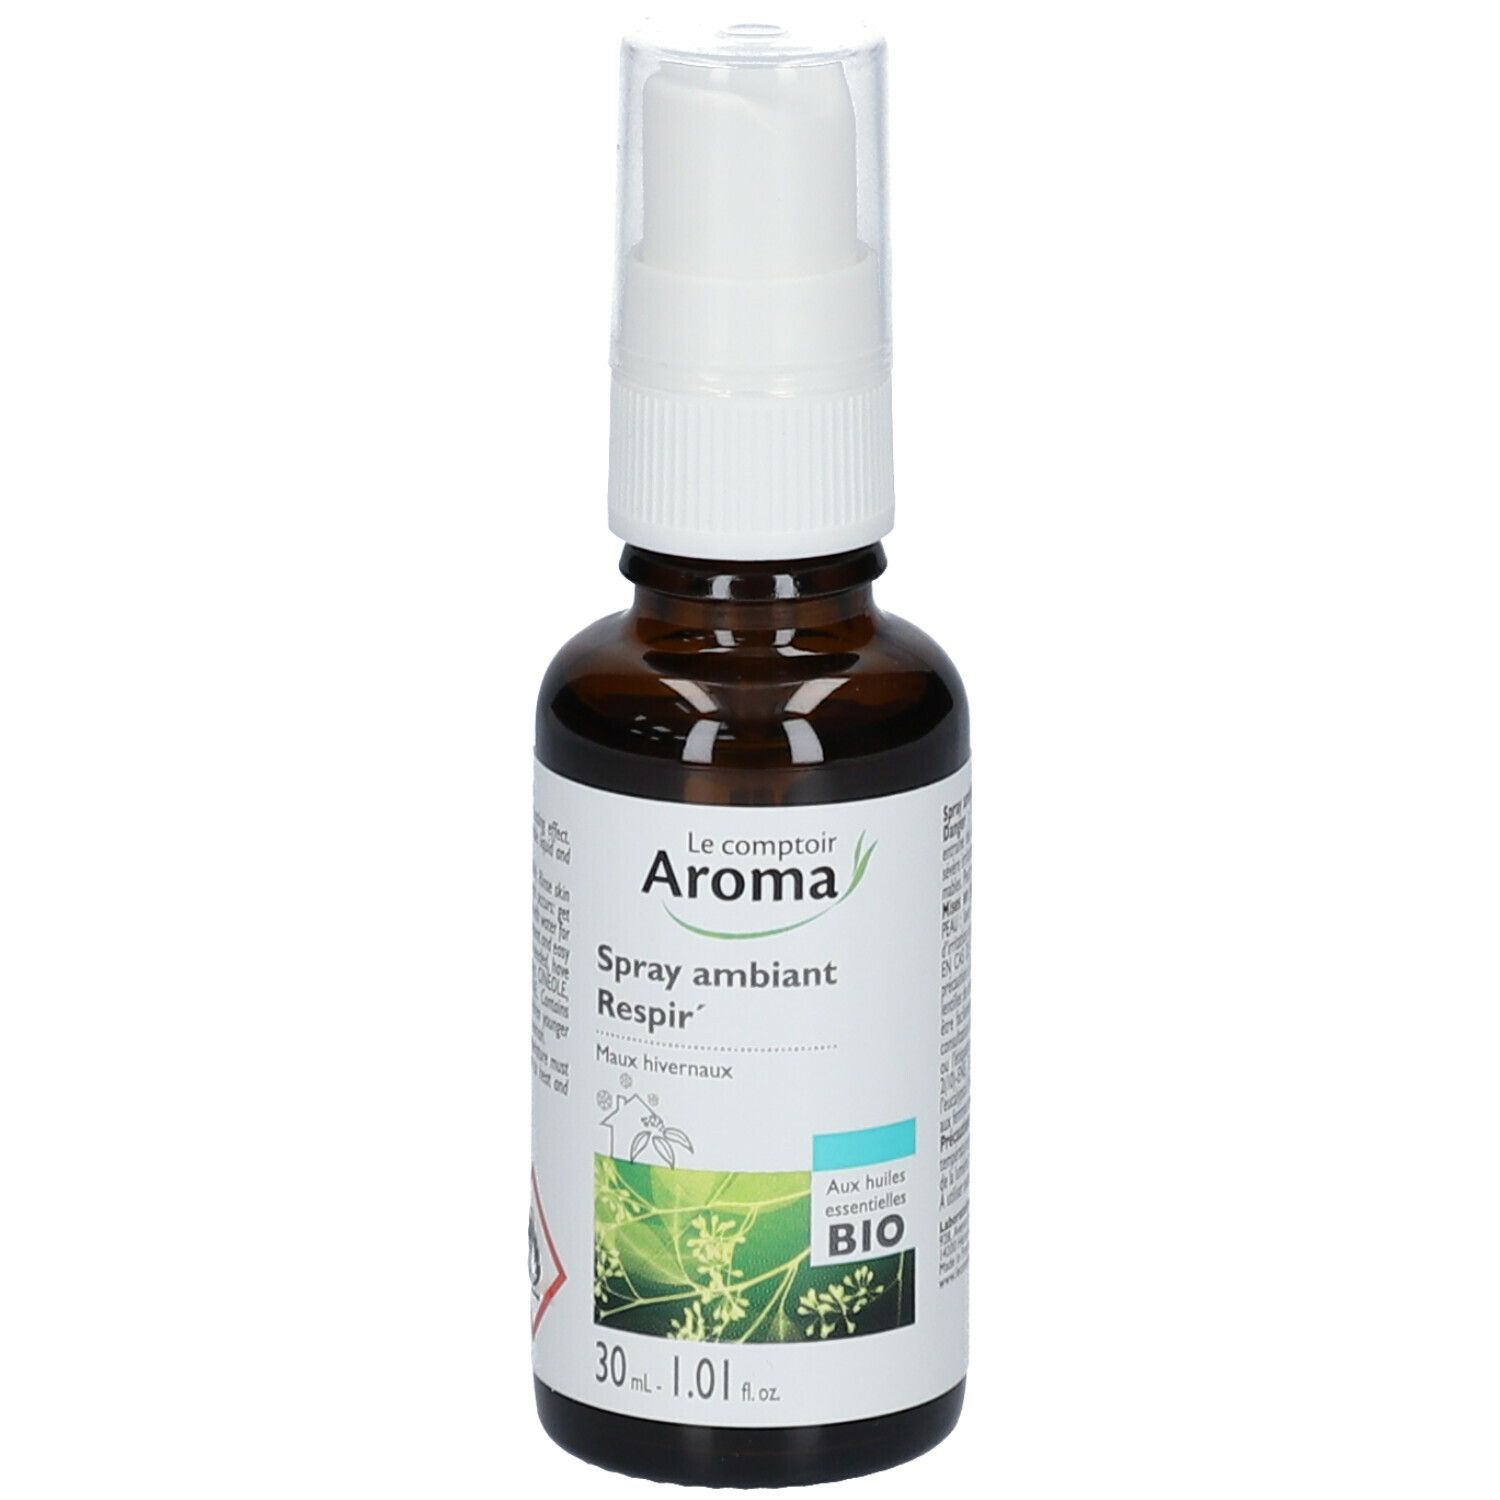 Le Comptoir Aroma Respir' spray ambiant eucalyptus nez et bronches